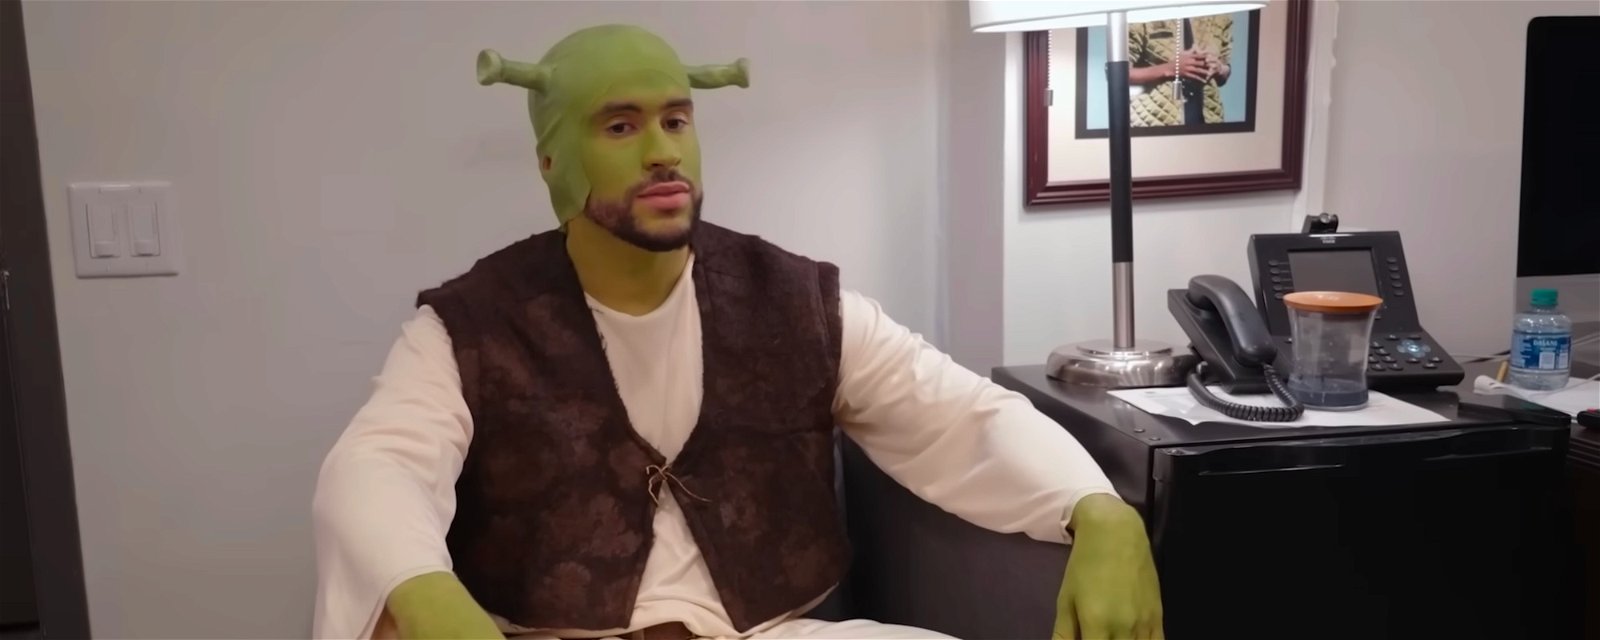 Bad Bunny s'habille en Shrek dans le sketch farfelu "Saturday Night Live"